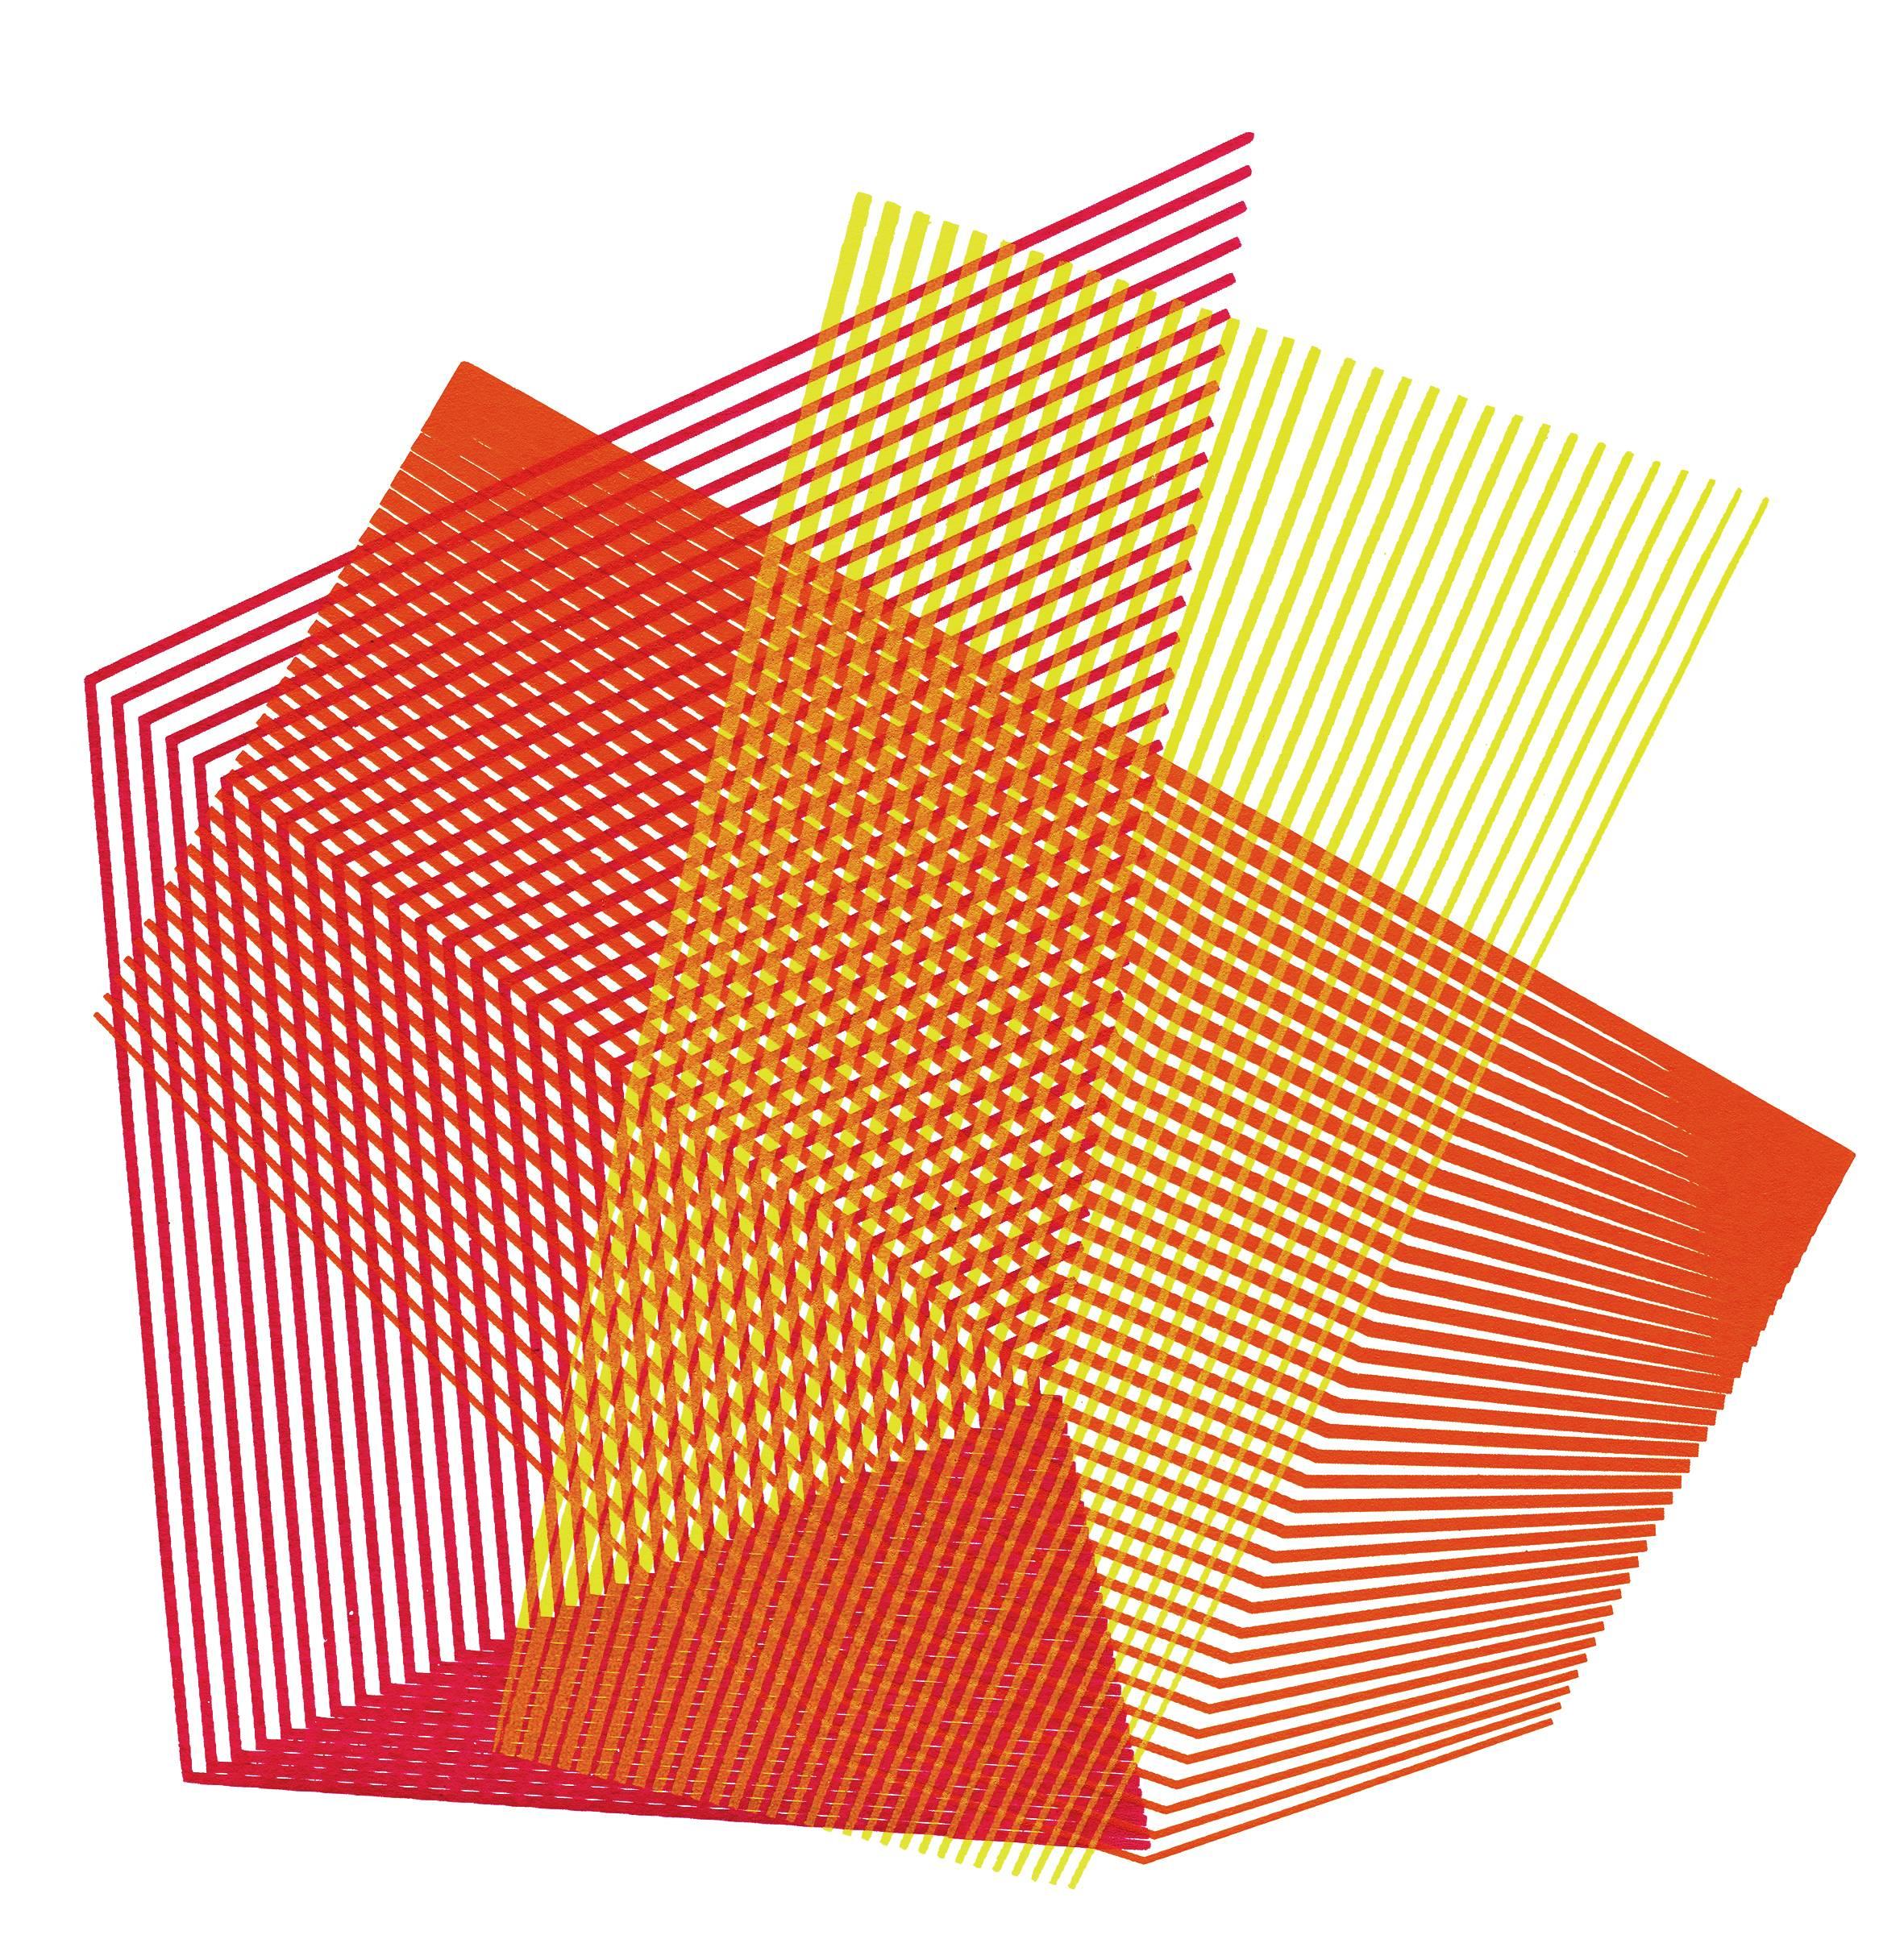 Geometric Limited Edition Hand-Pulled Silkscreen Print by Kate Banazi